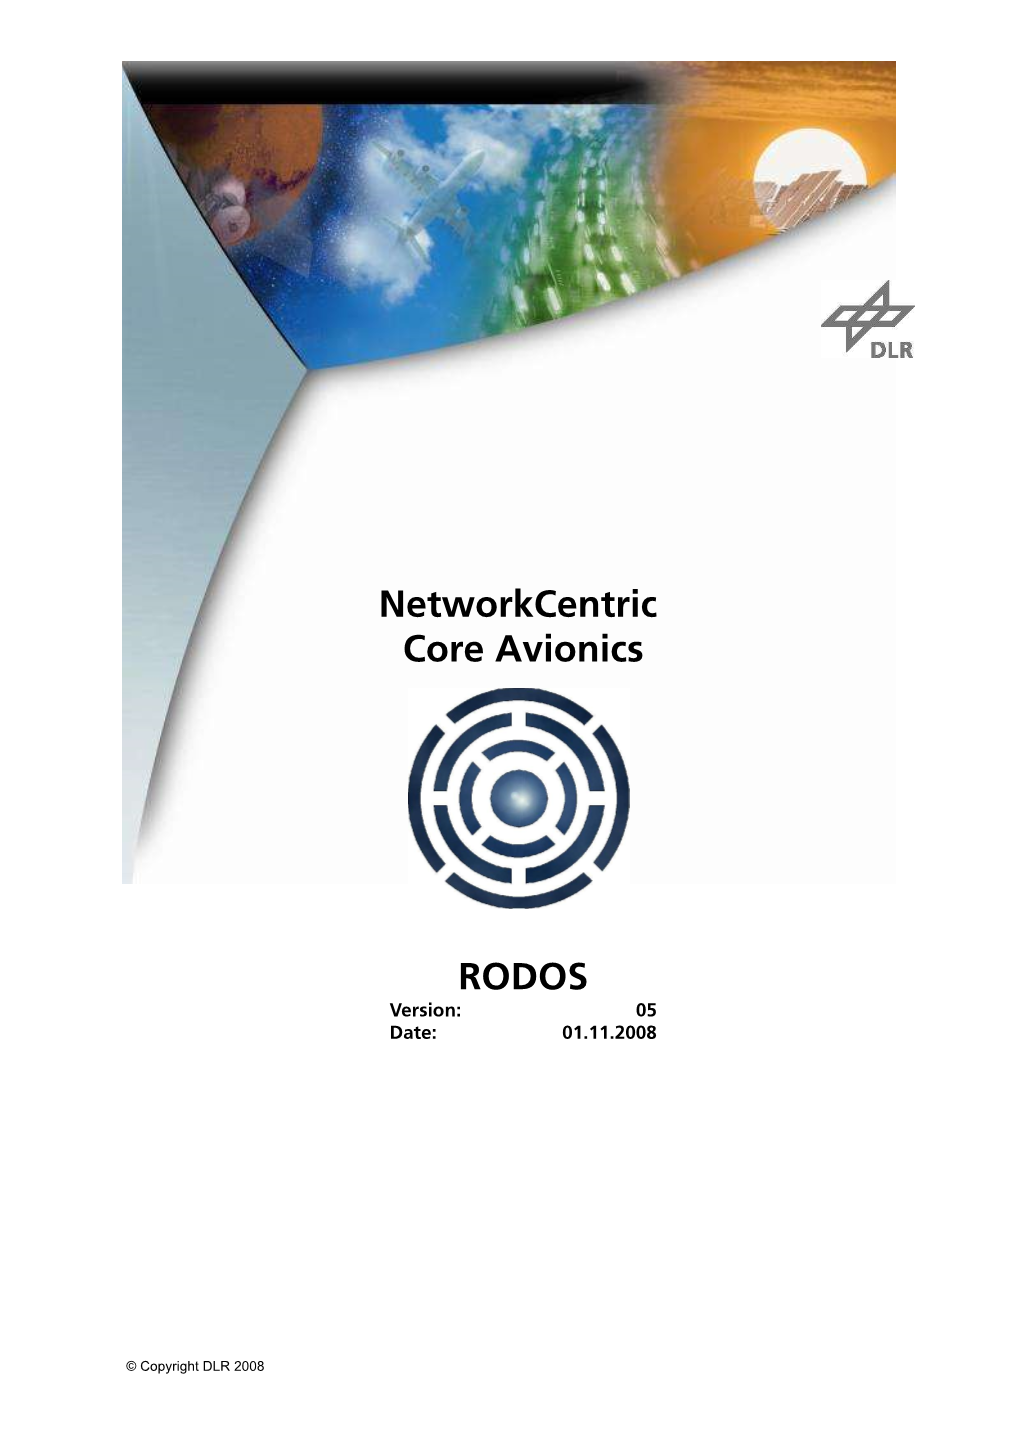 Networkcentric Core Avionics RODOS